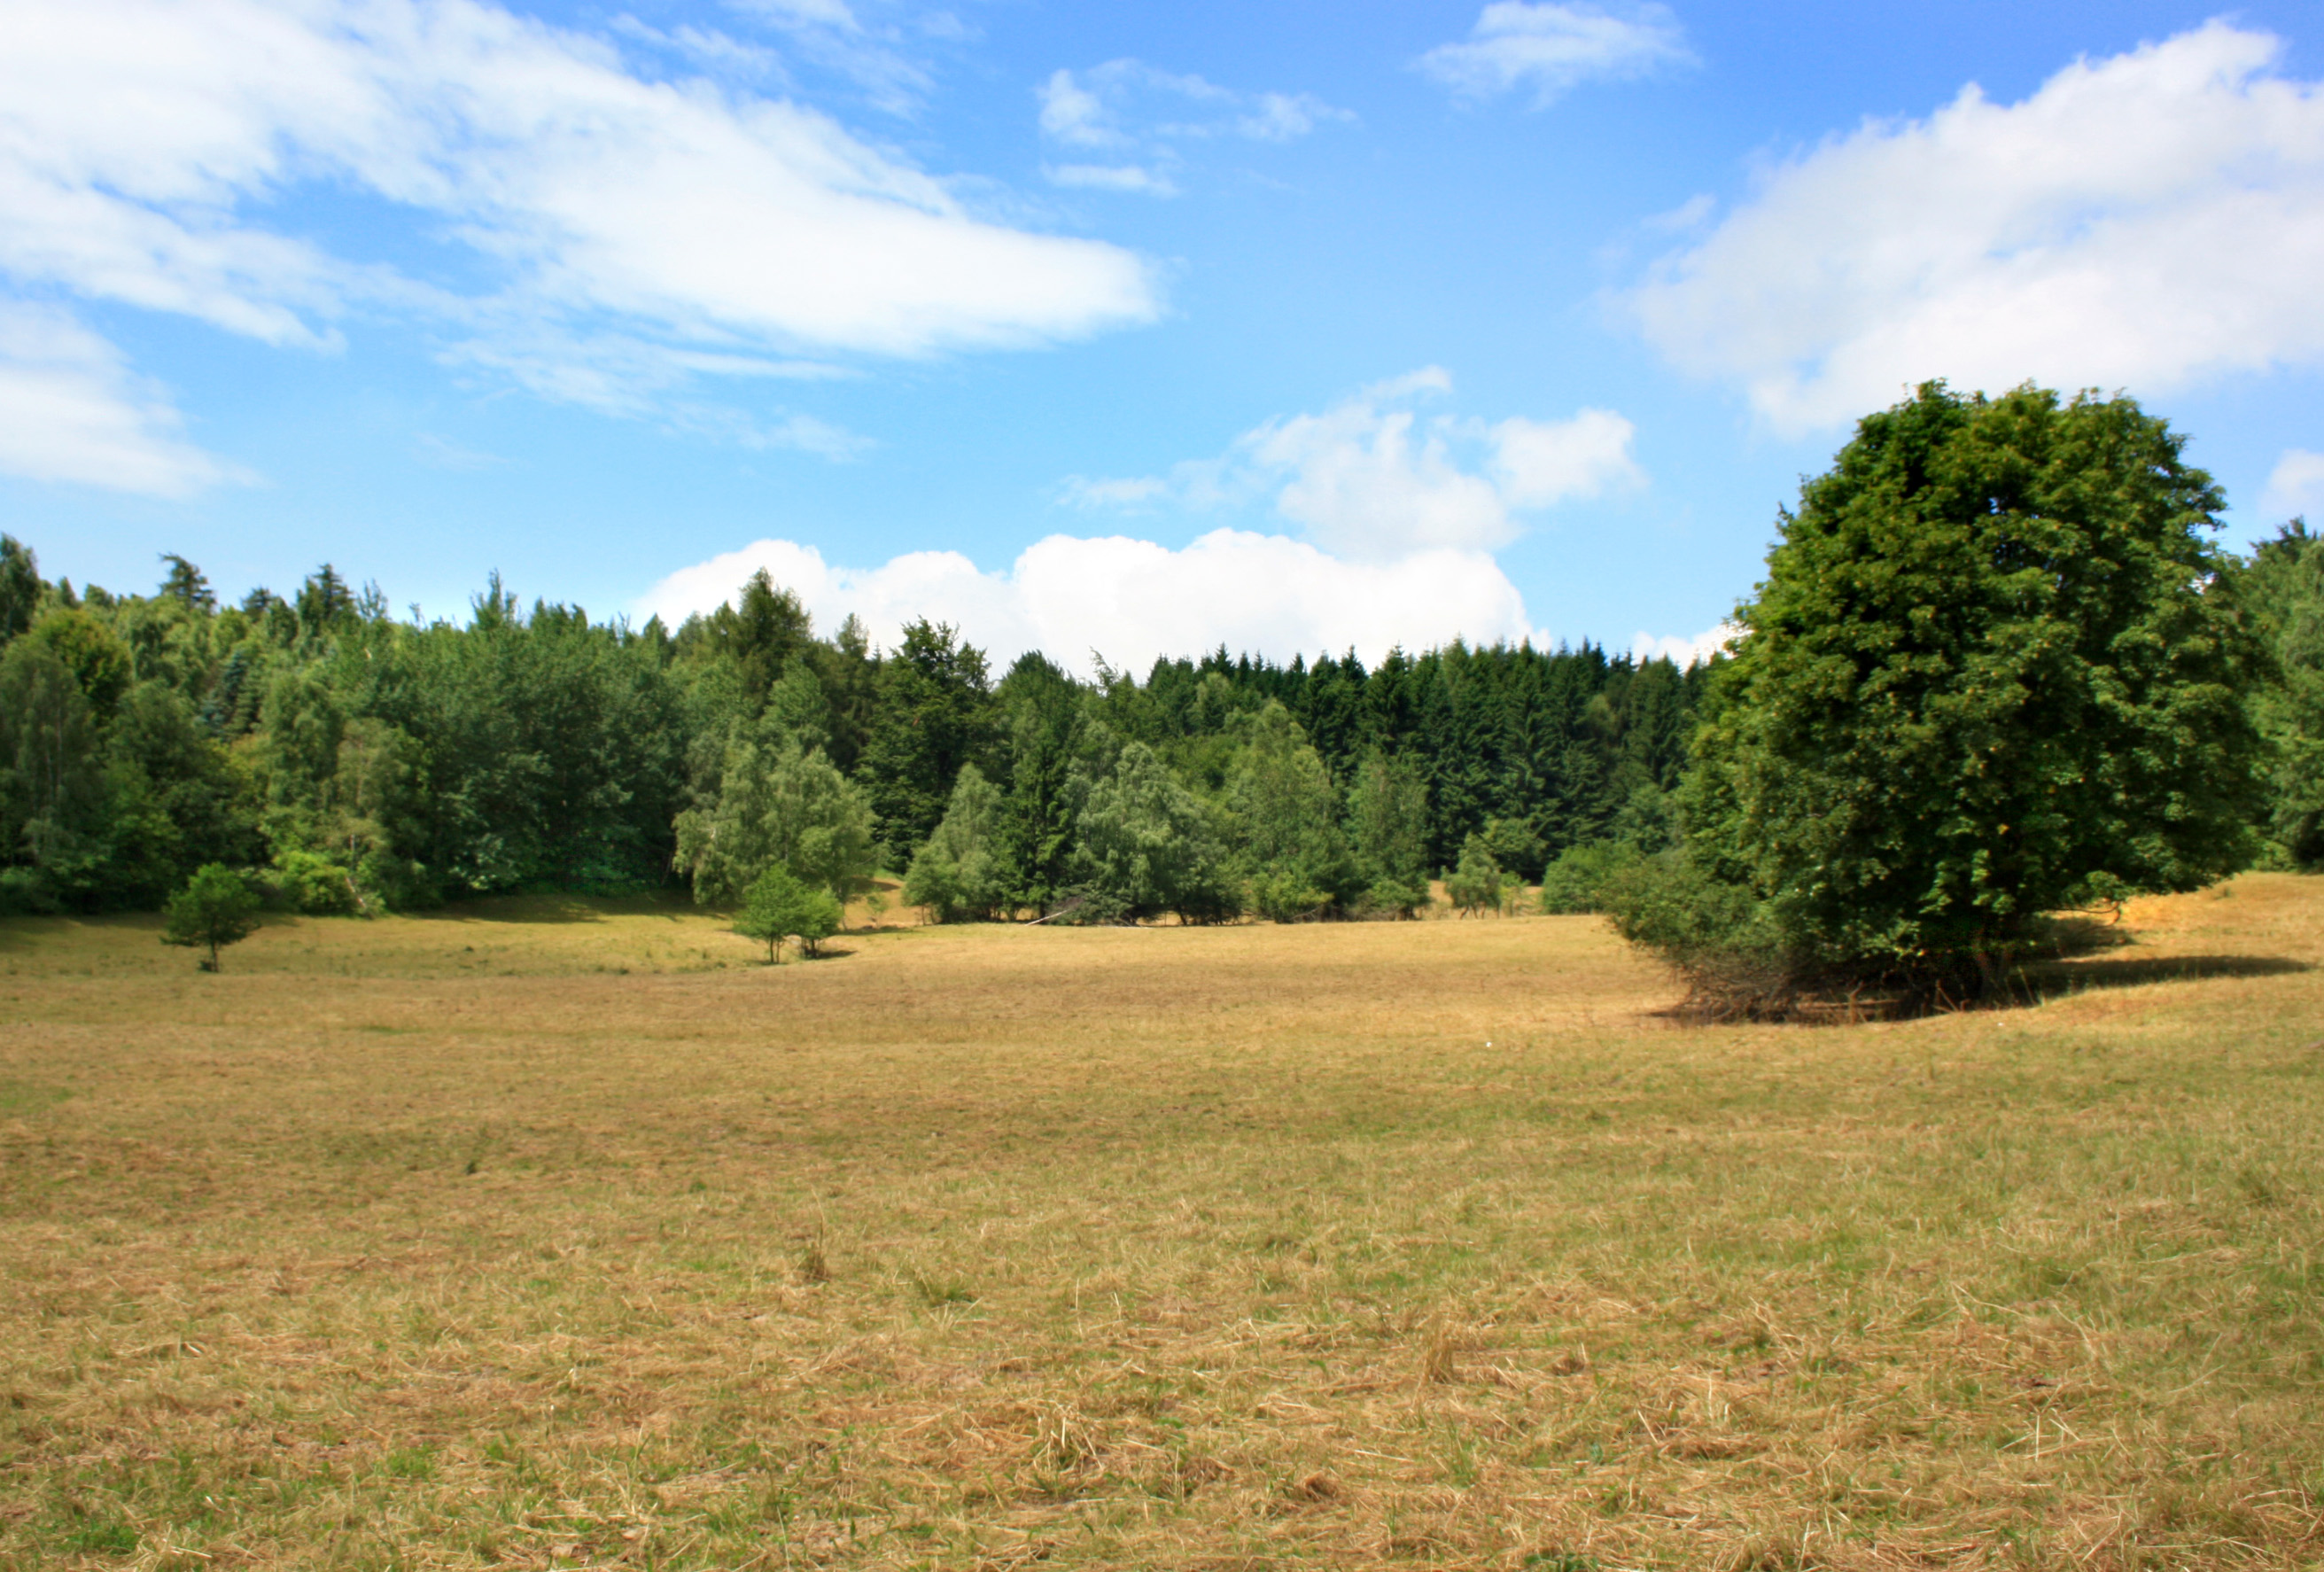 File:Landscape by Boleboř village.jpg - Wikimedia Commons